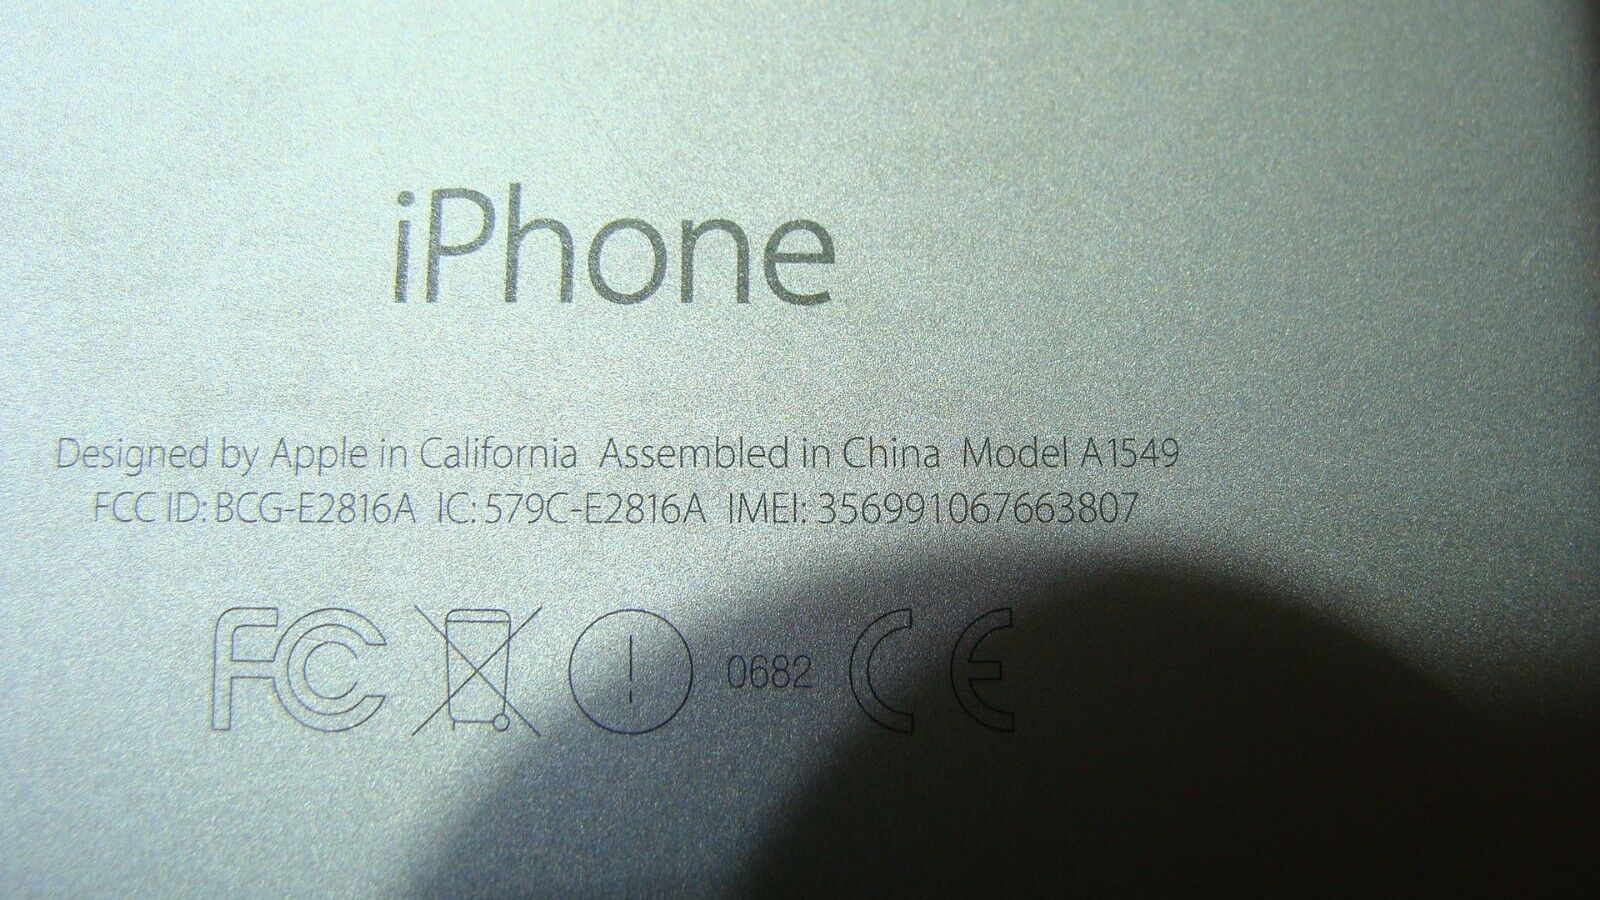 iPhone 6 A1549 MG4X2LL/A Late 2014 4.7